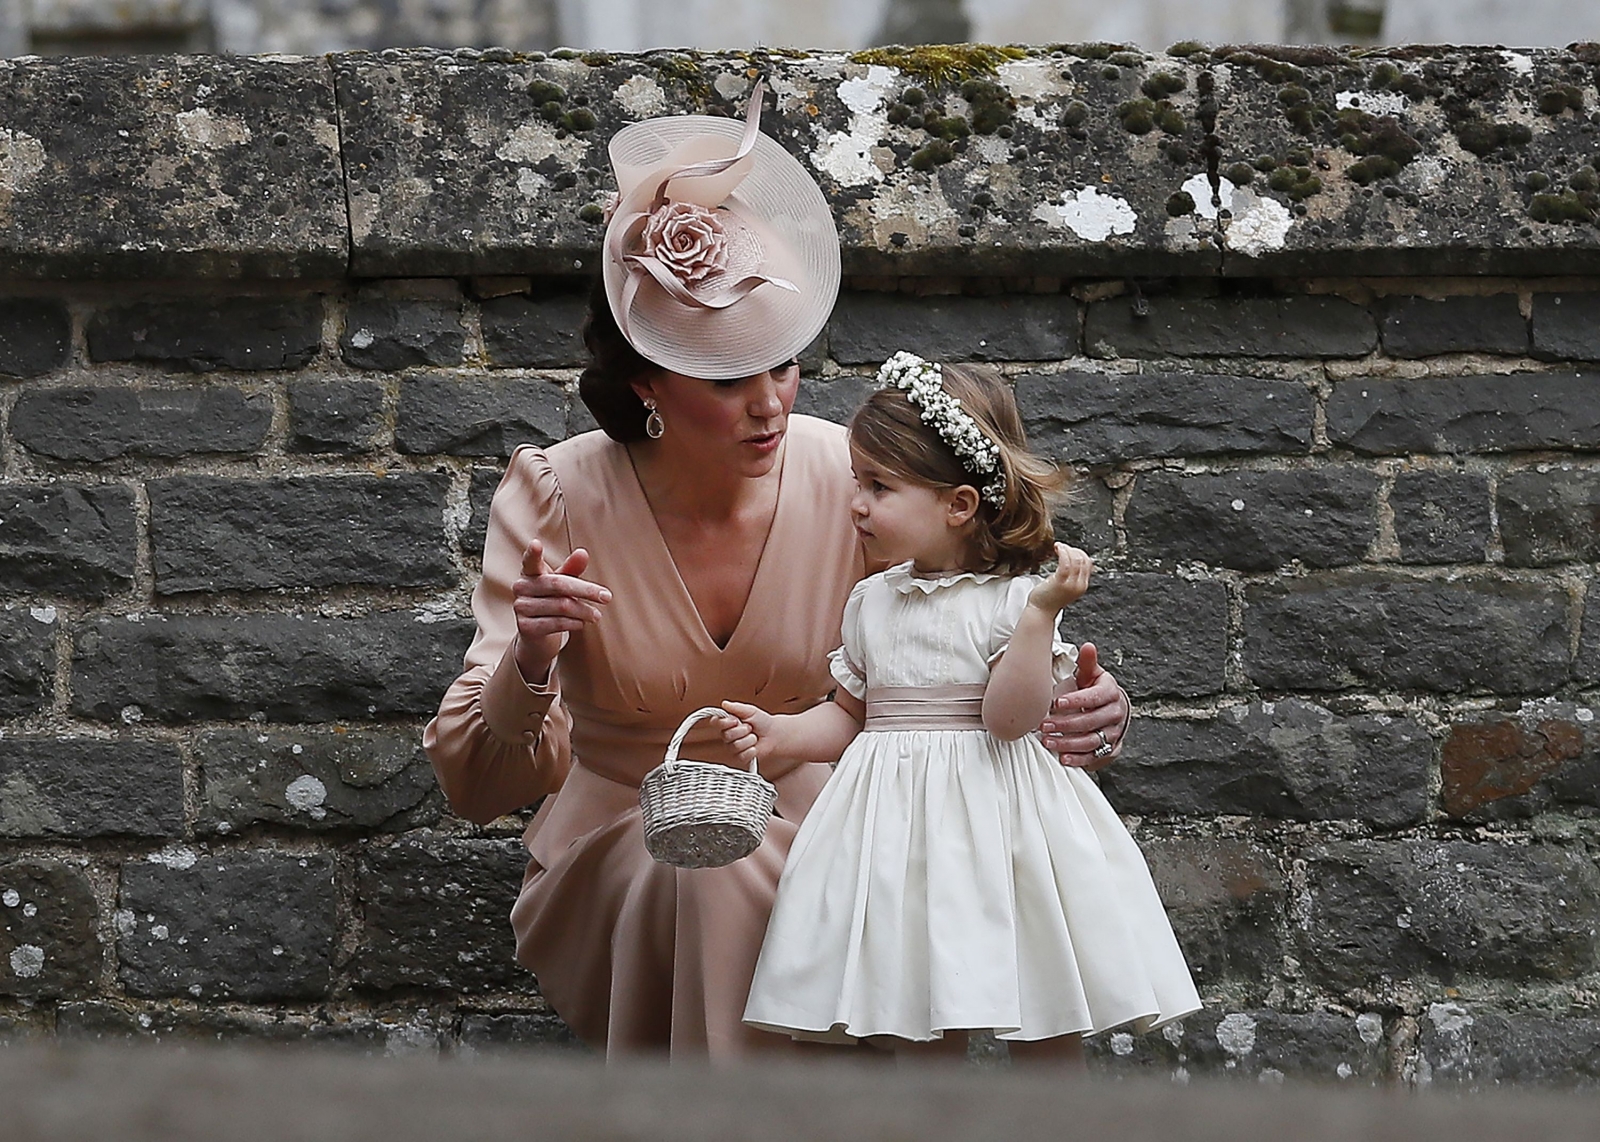 Kate Middleton with Princess Charlotte